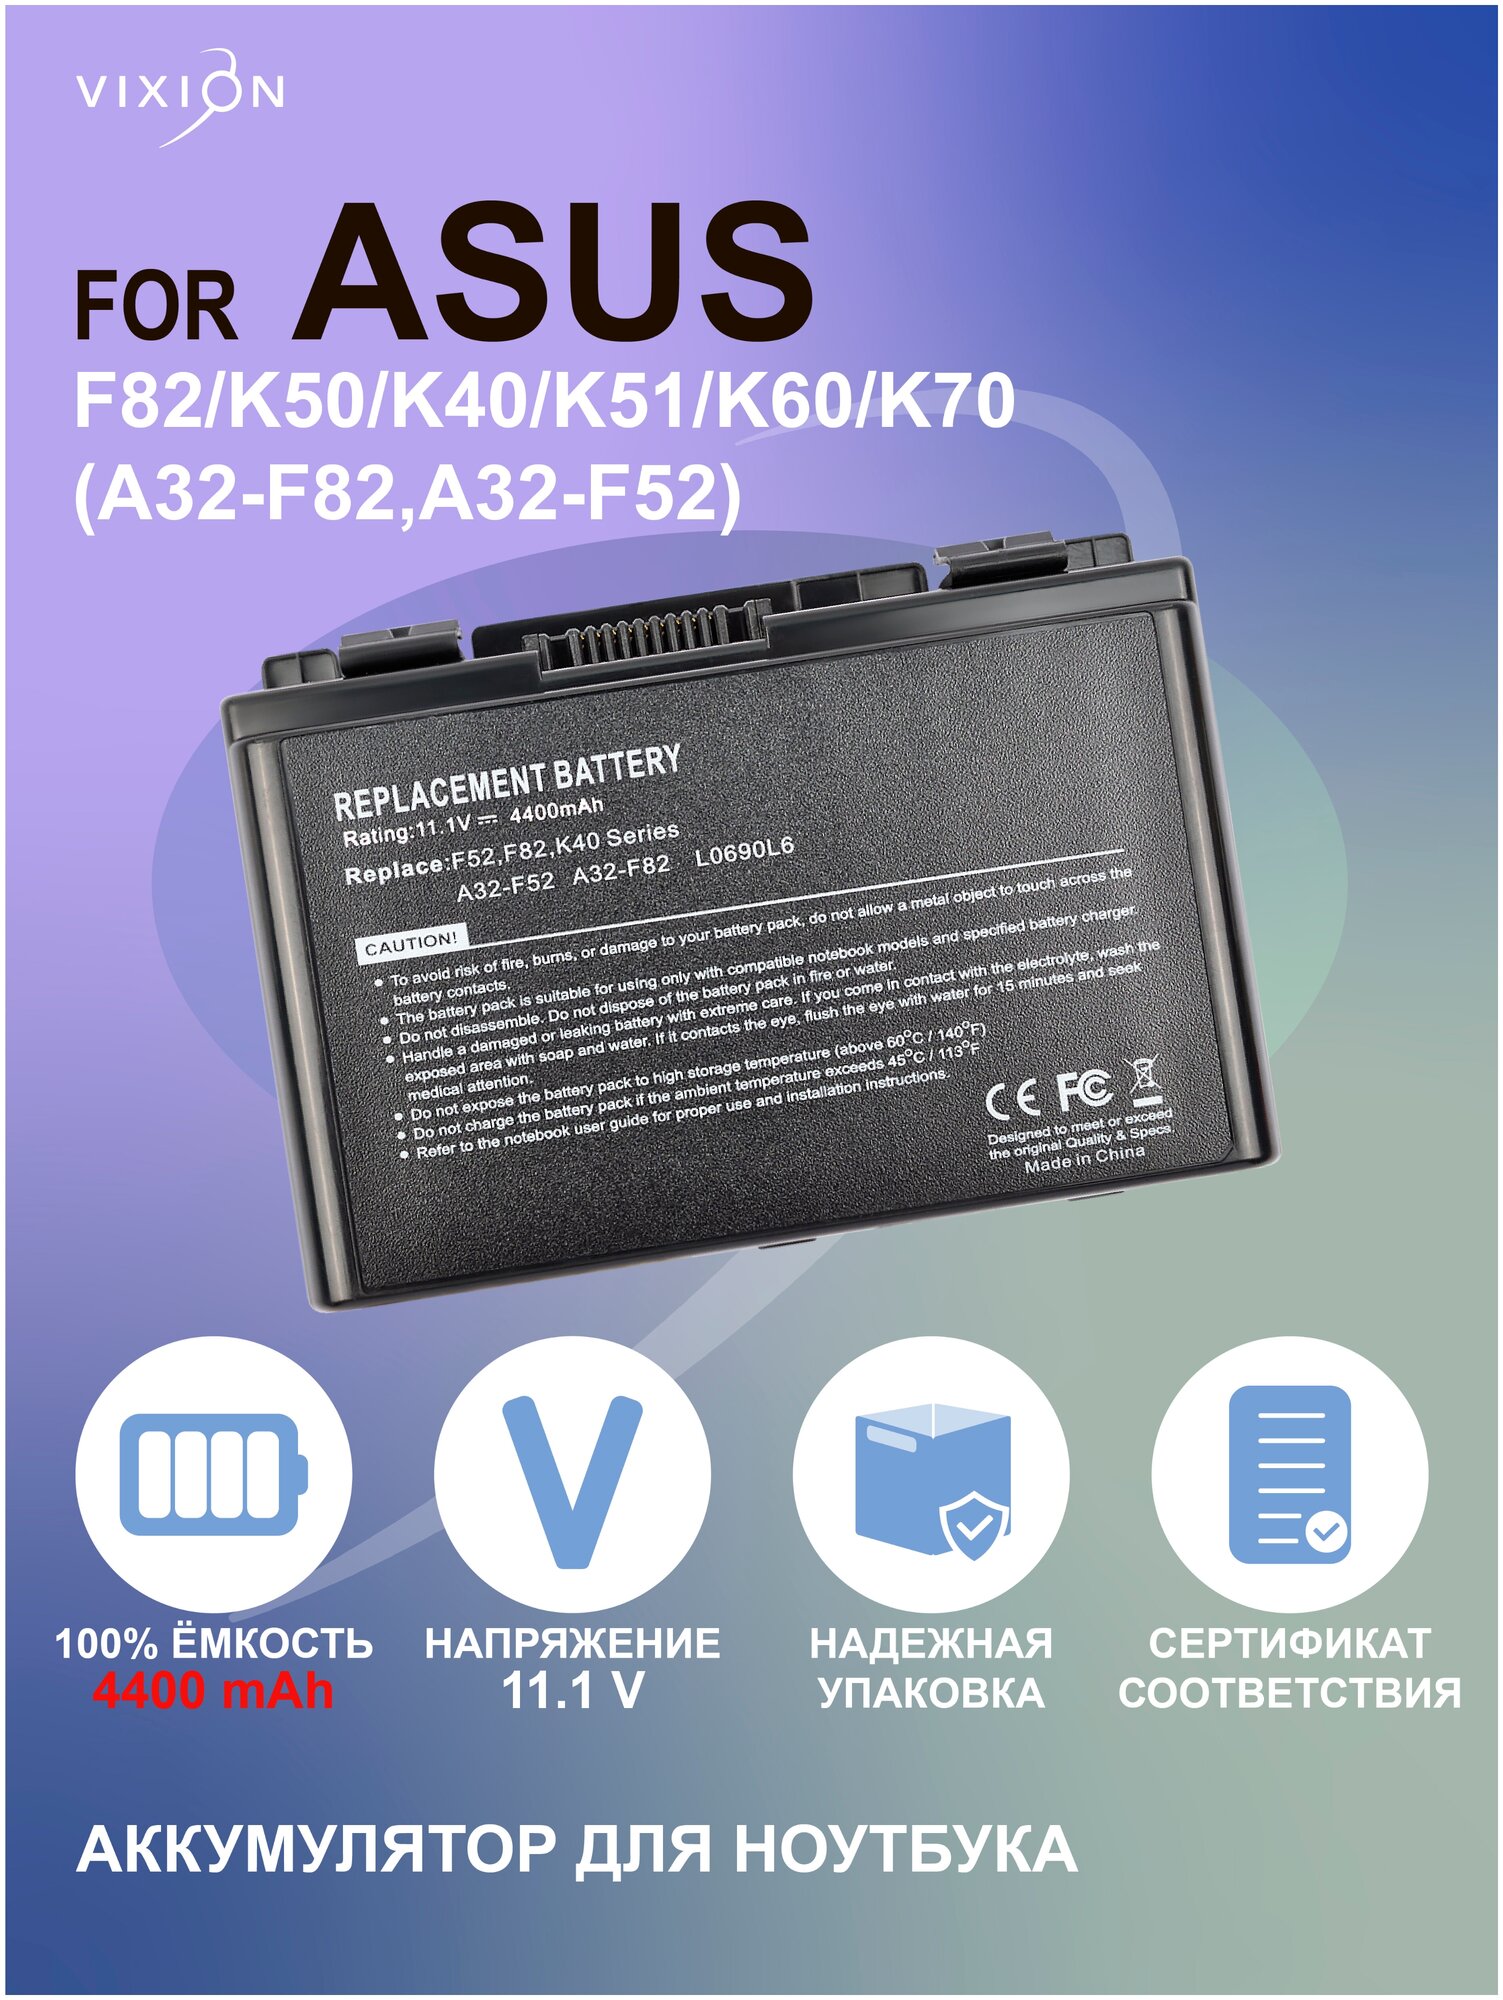 Аккумулятор для ноутбука Asus , батарея , асус F82/K50/K40/K51/K60/K70/A32-F82/A32-F52/4400mAh/vixion